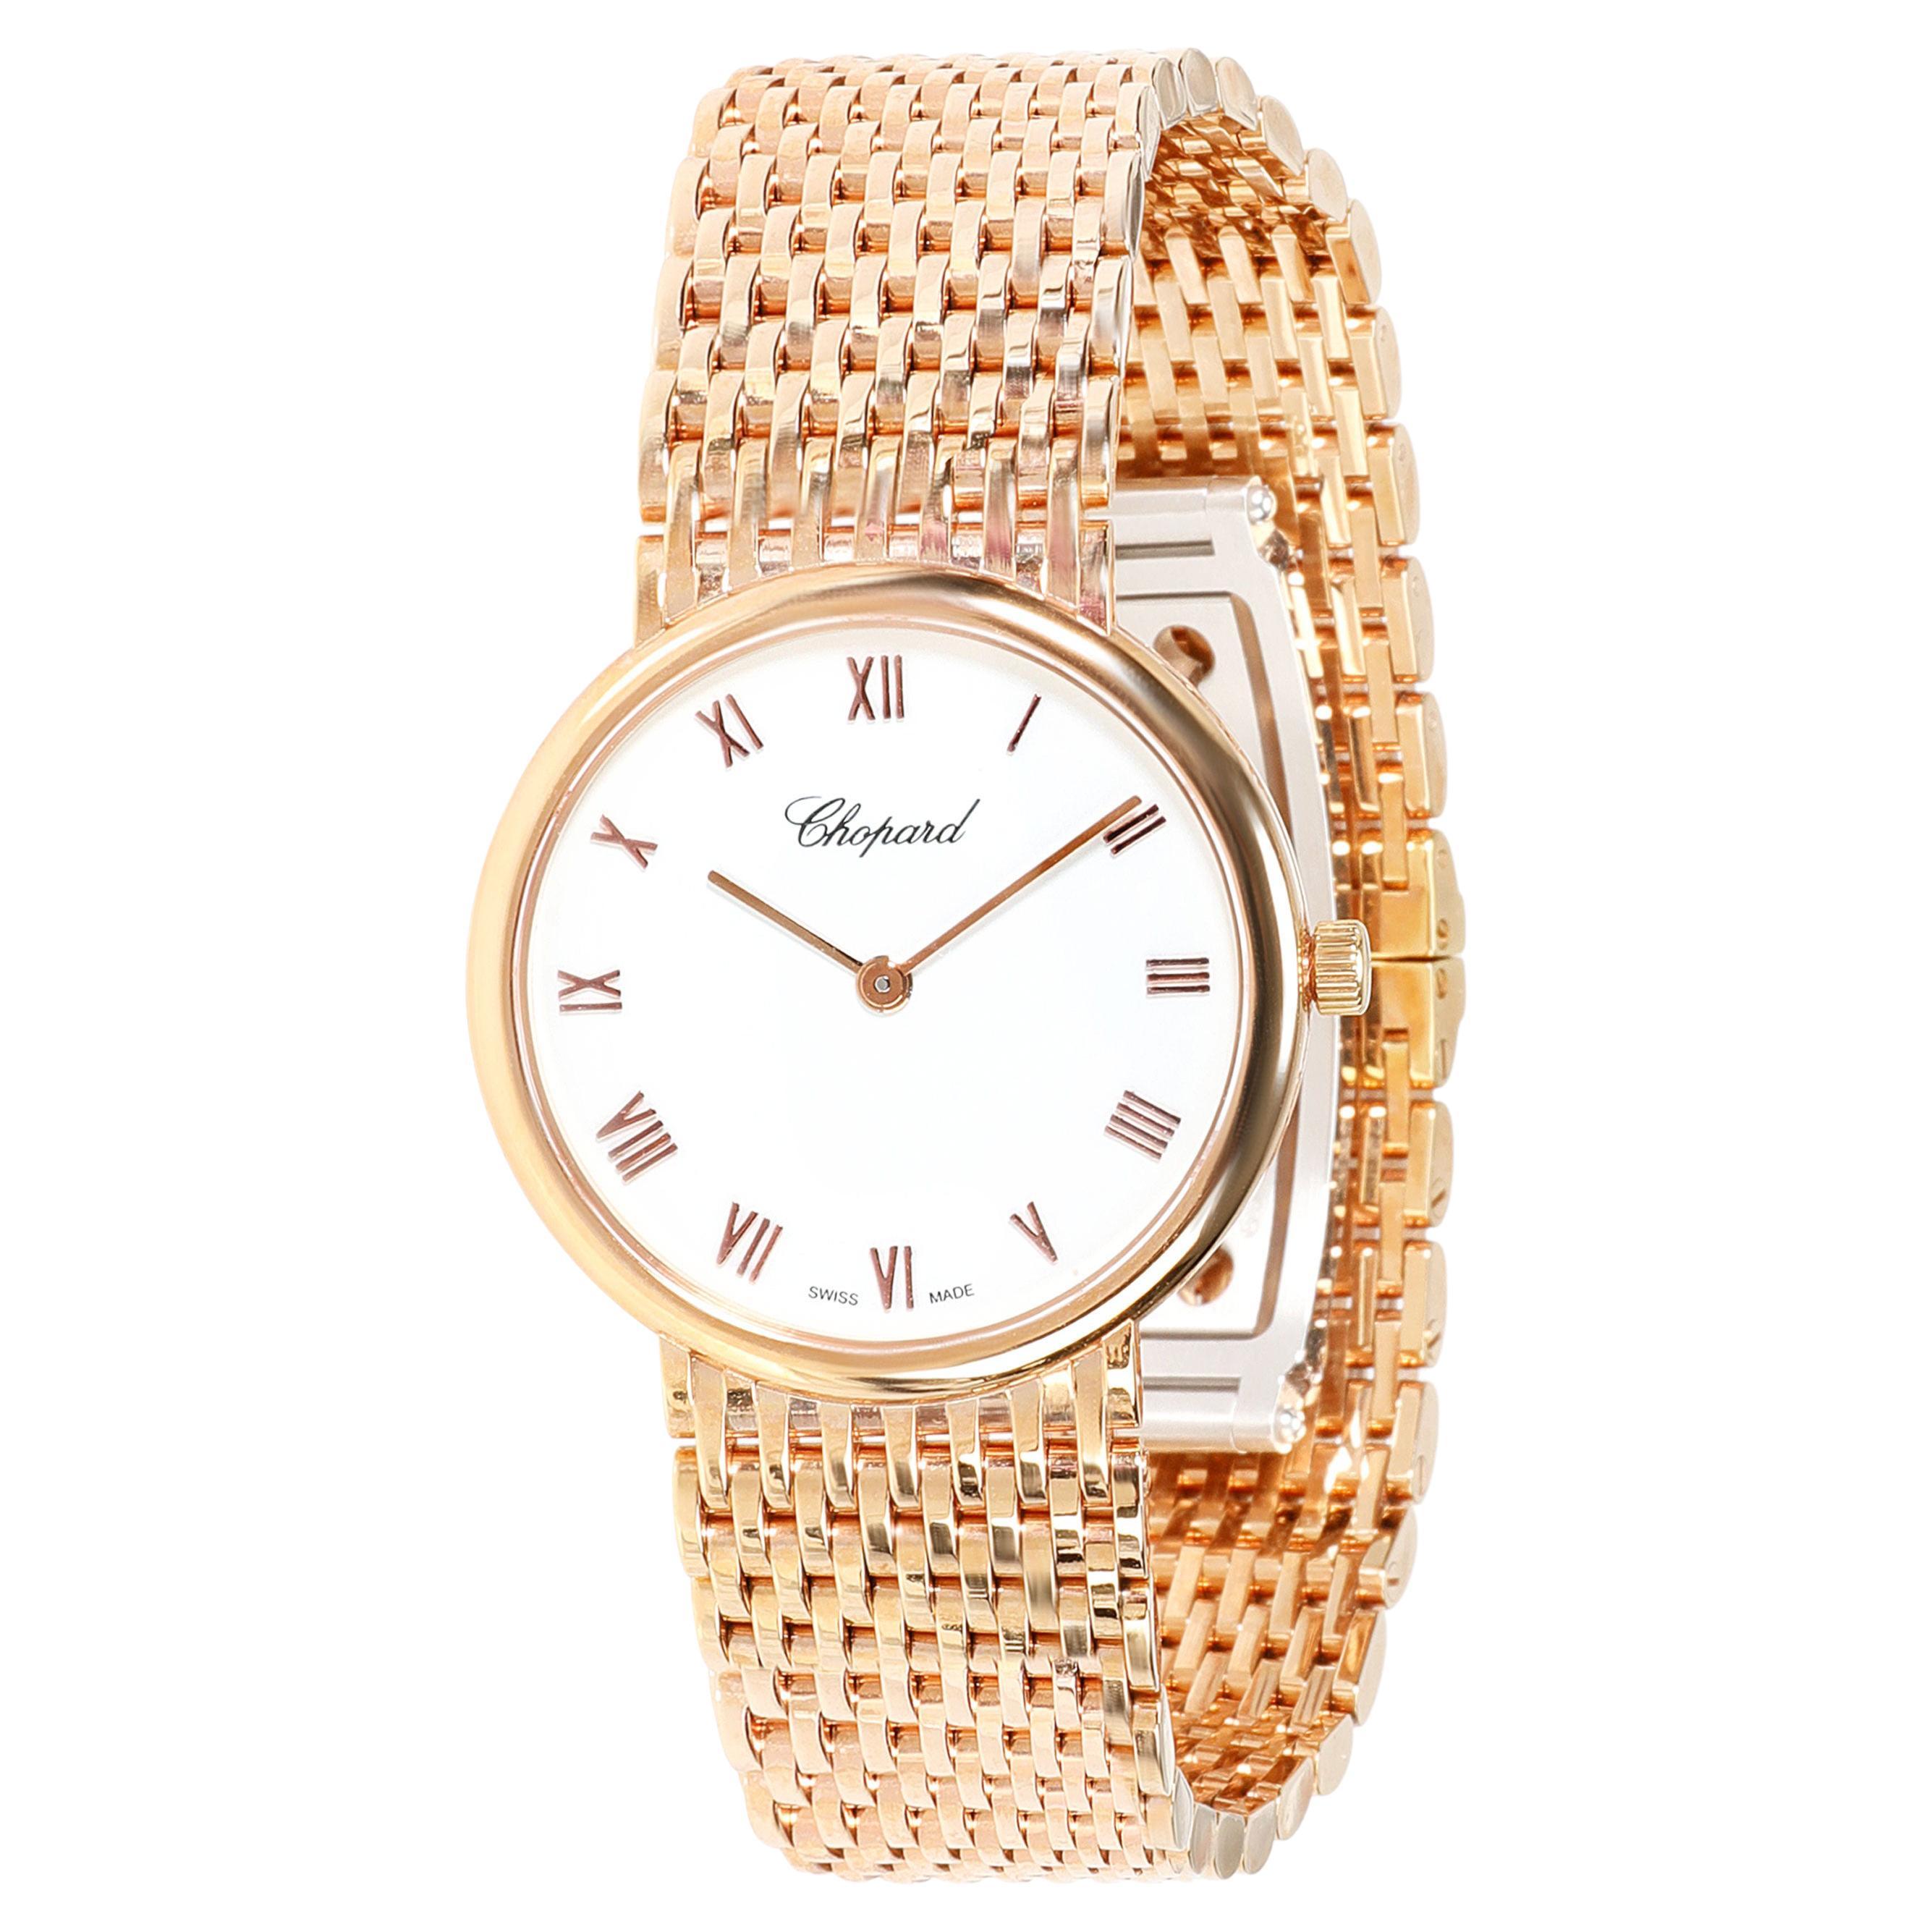 Brand New Chopard Classic 119392-5001 Women's Watch in 18kt Rose Gold